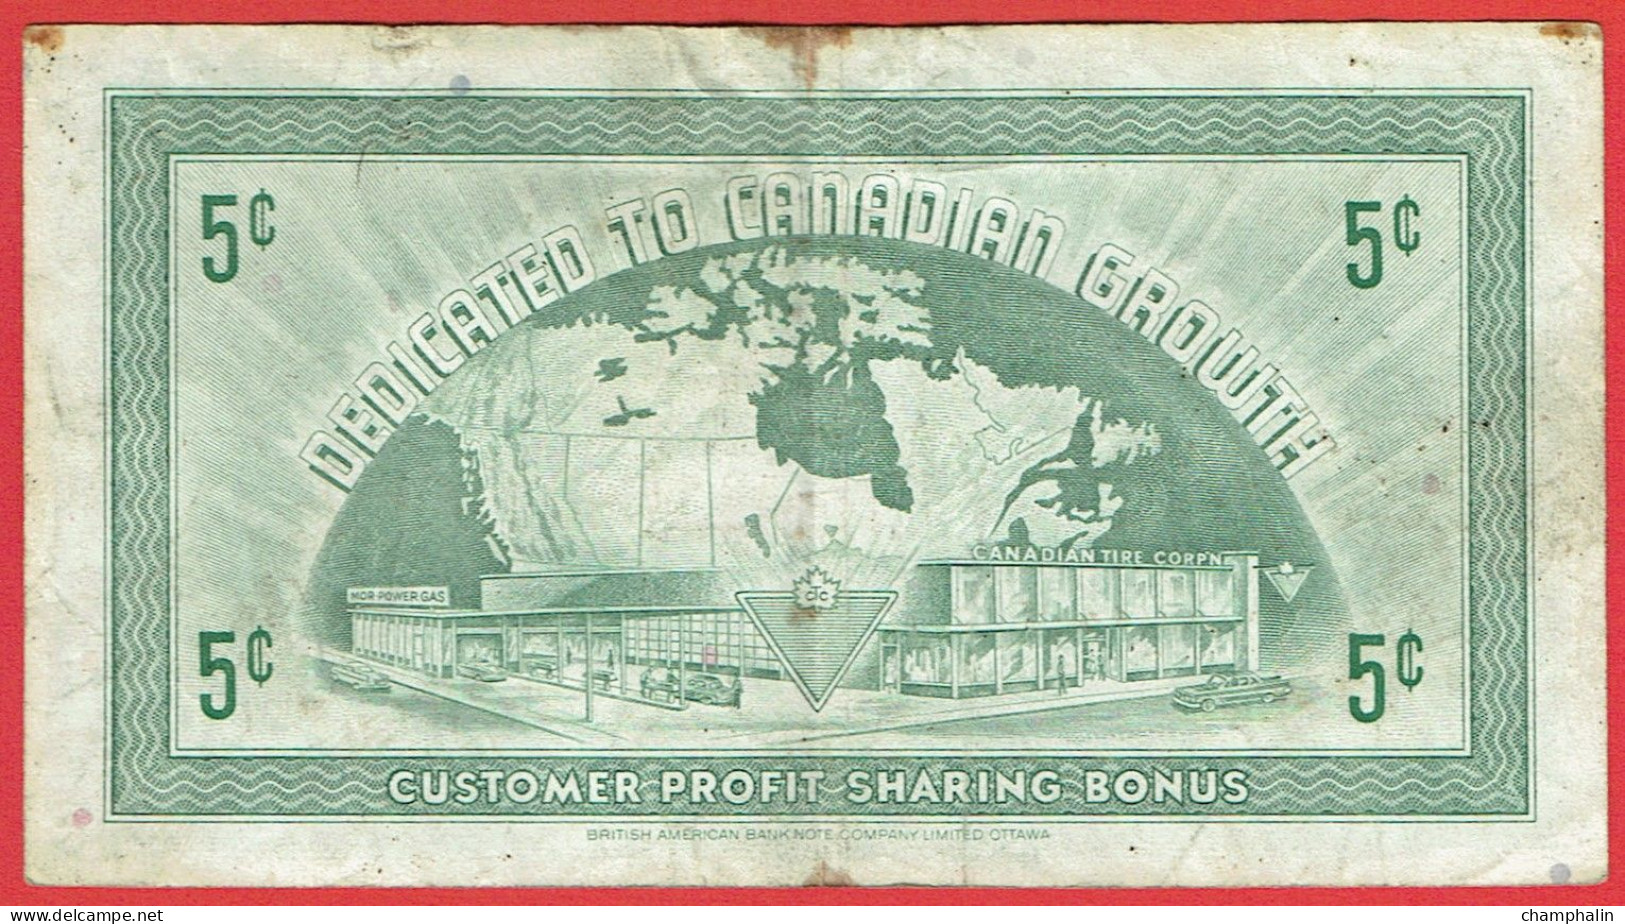 Canada - Magasins Canadian Tire - Billet Publicitaire Remboursable 5 Cents Années 60 - We Make Your Dollars Go Farther - Specimen